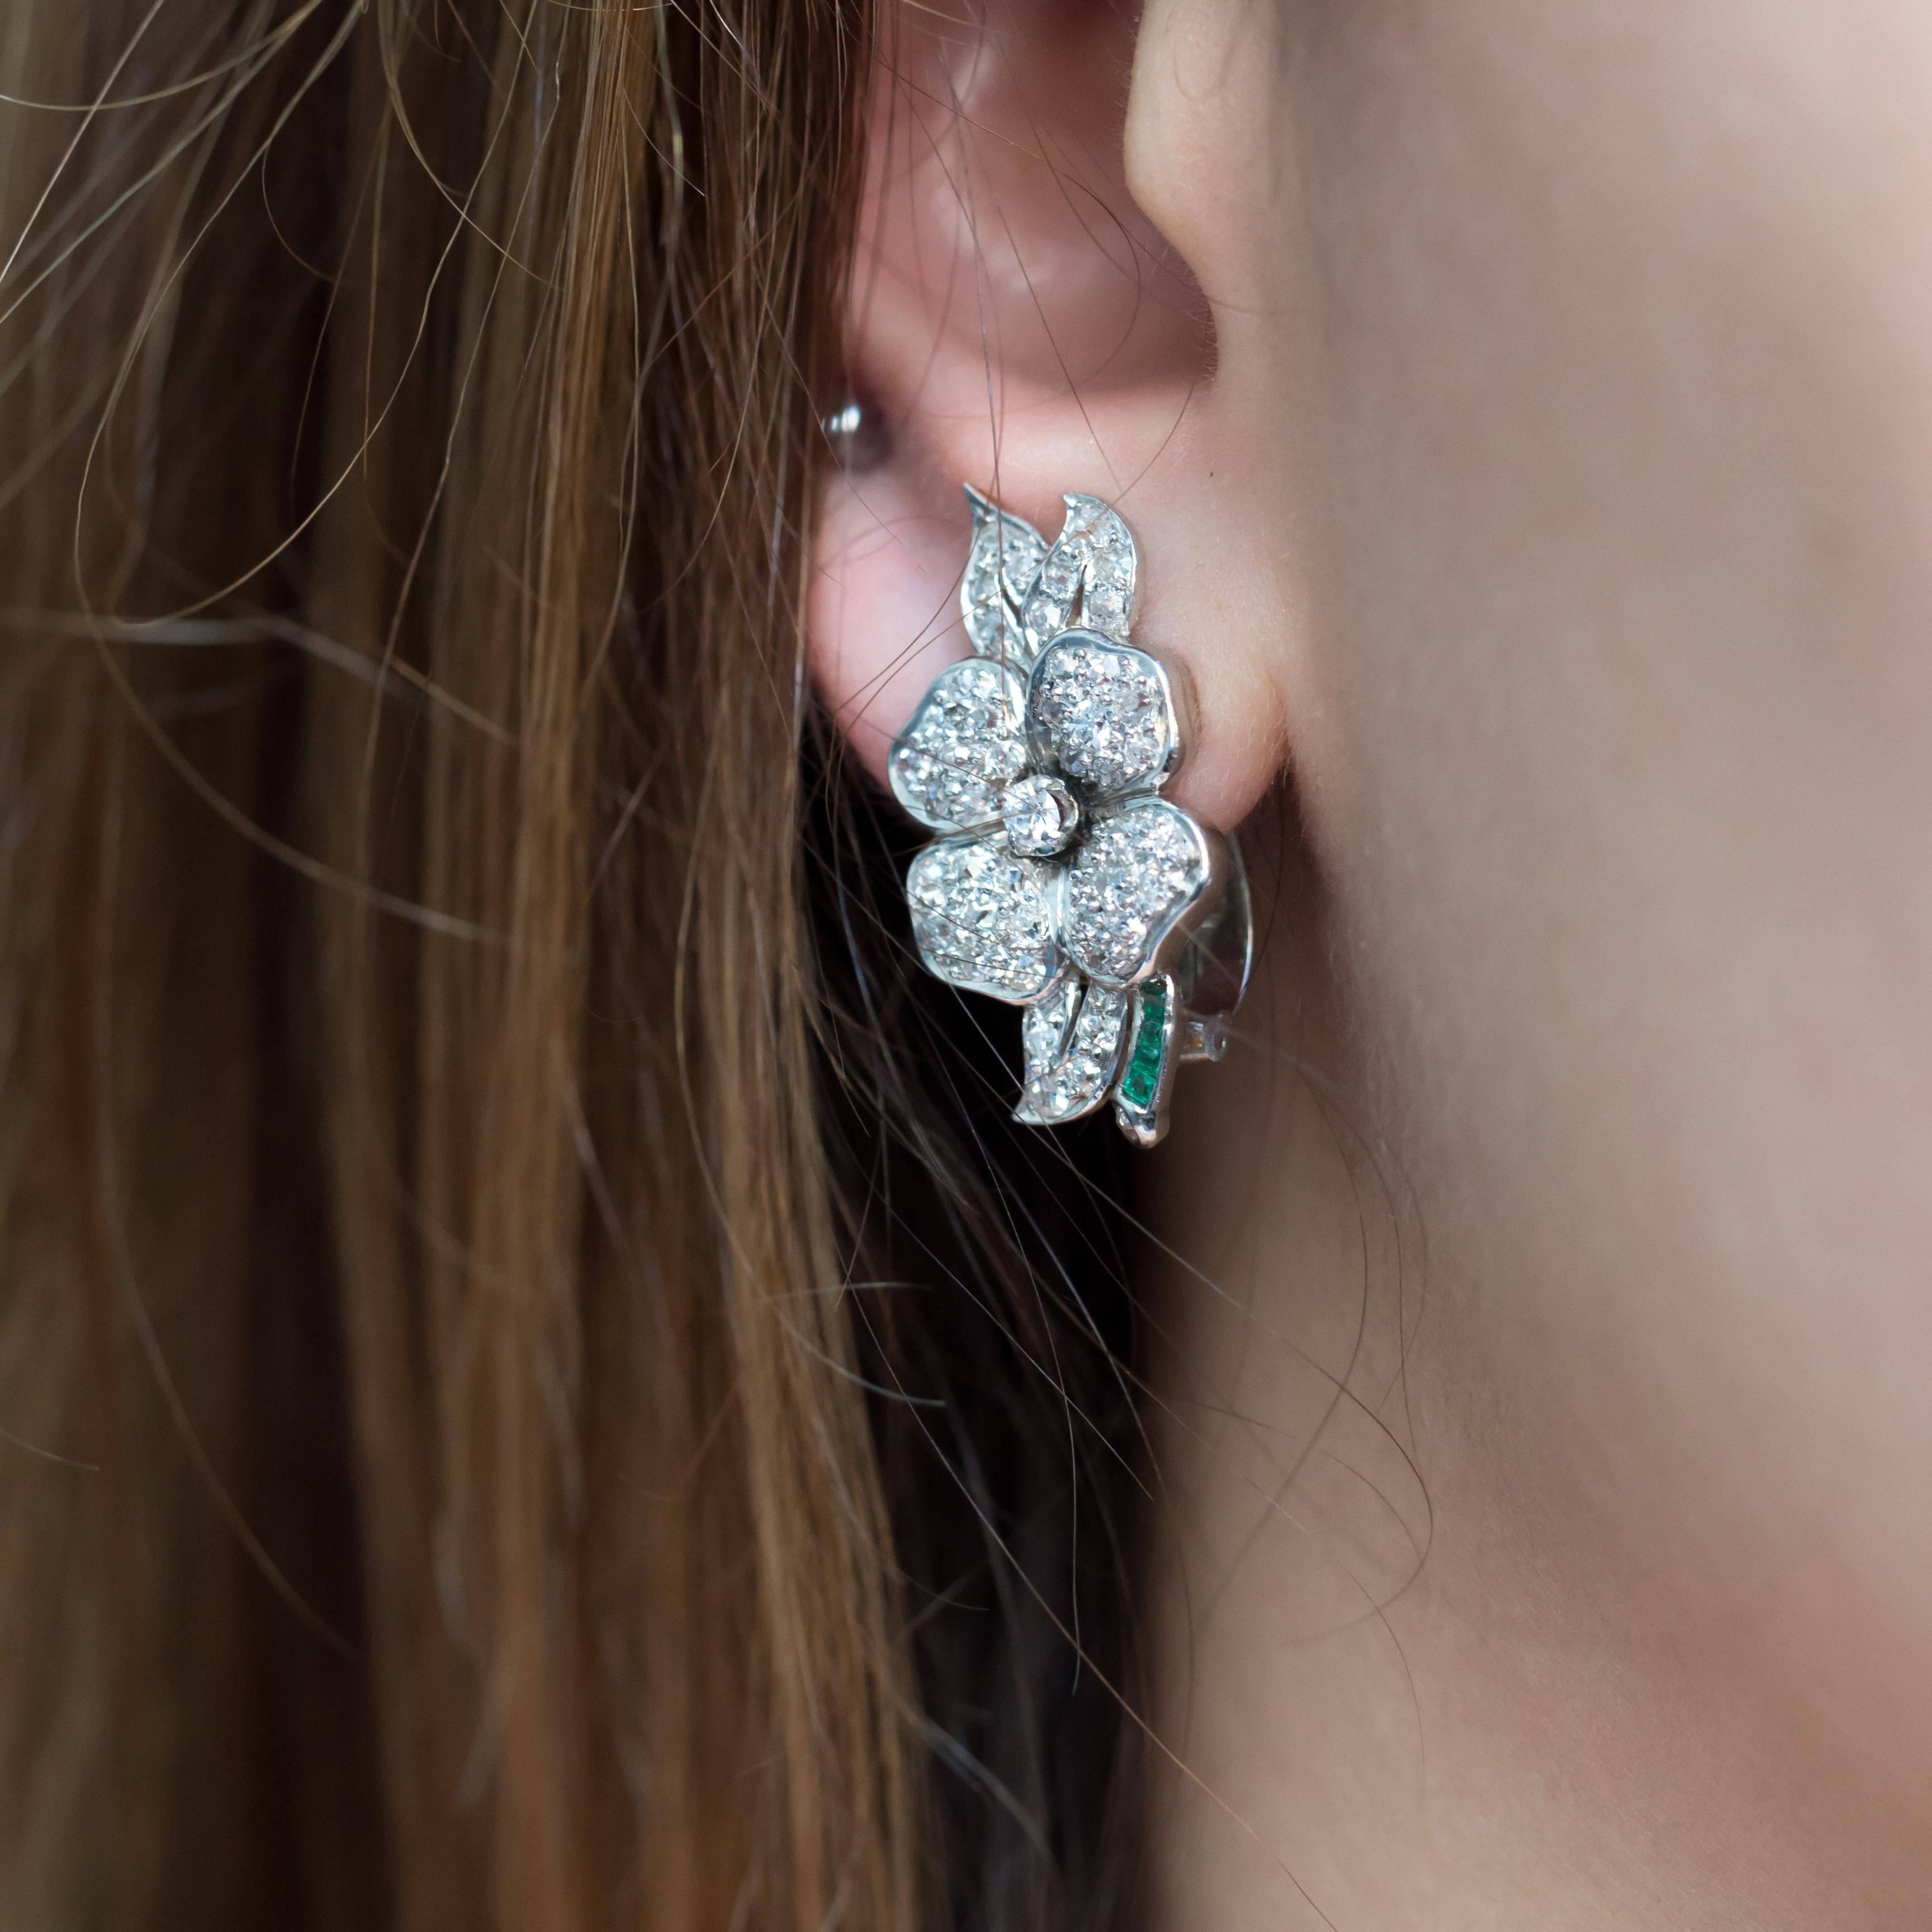 Women's Diamond and Emerald Earrings